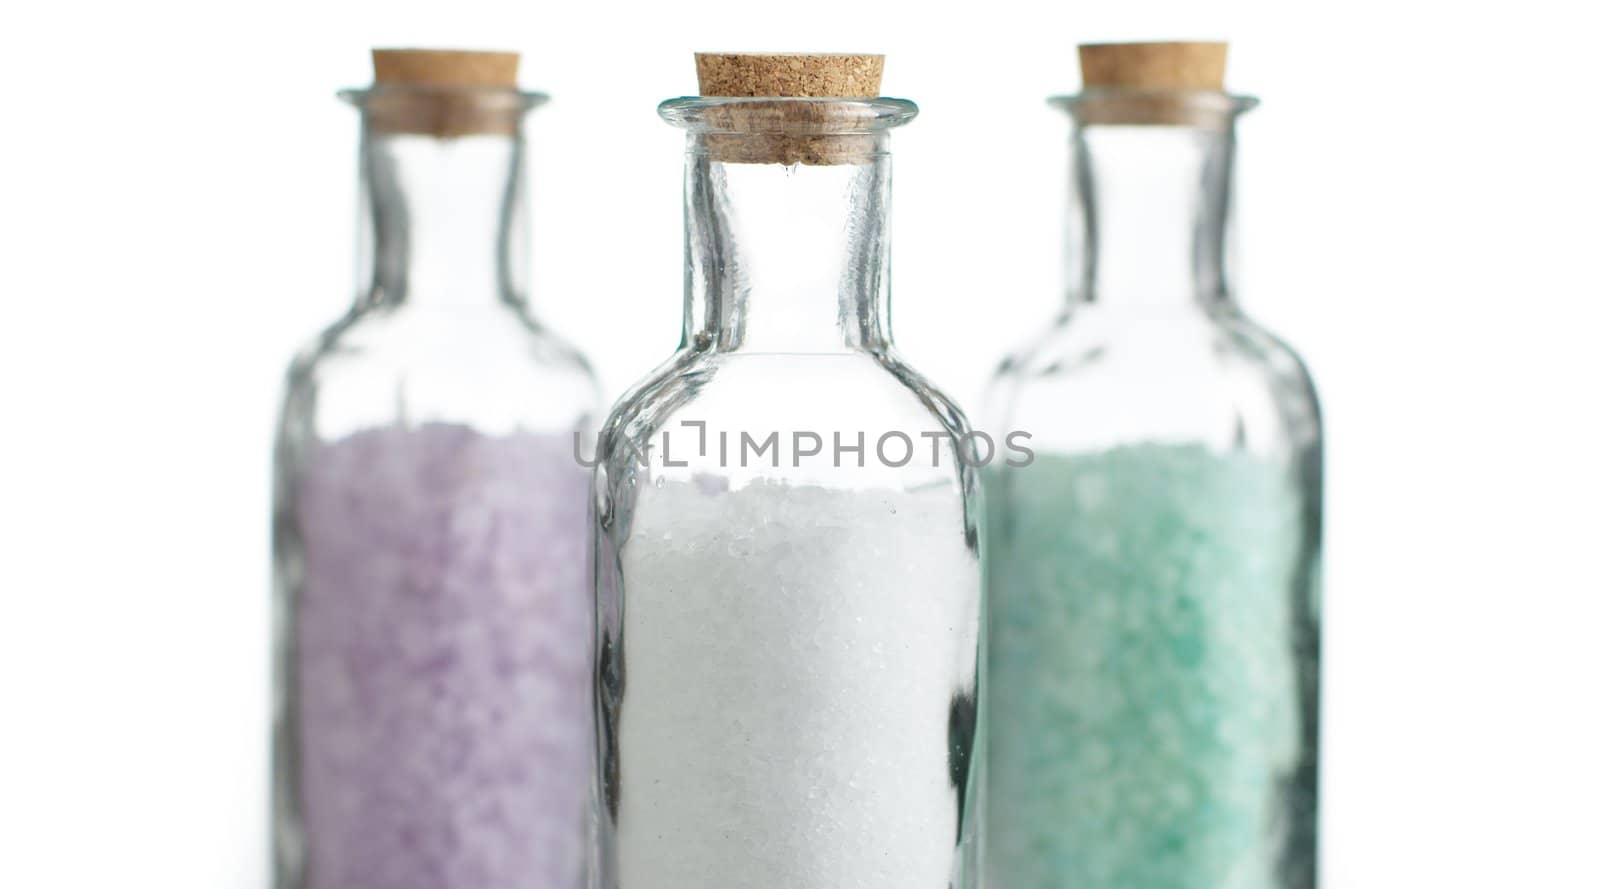 Colored bath salt against a white background.